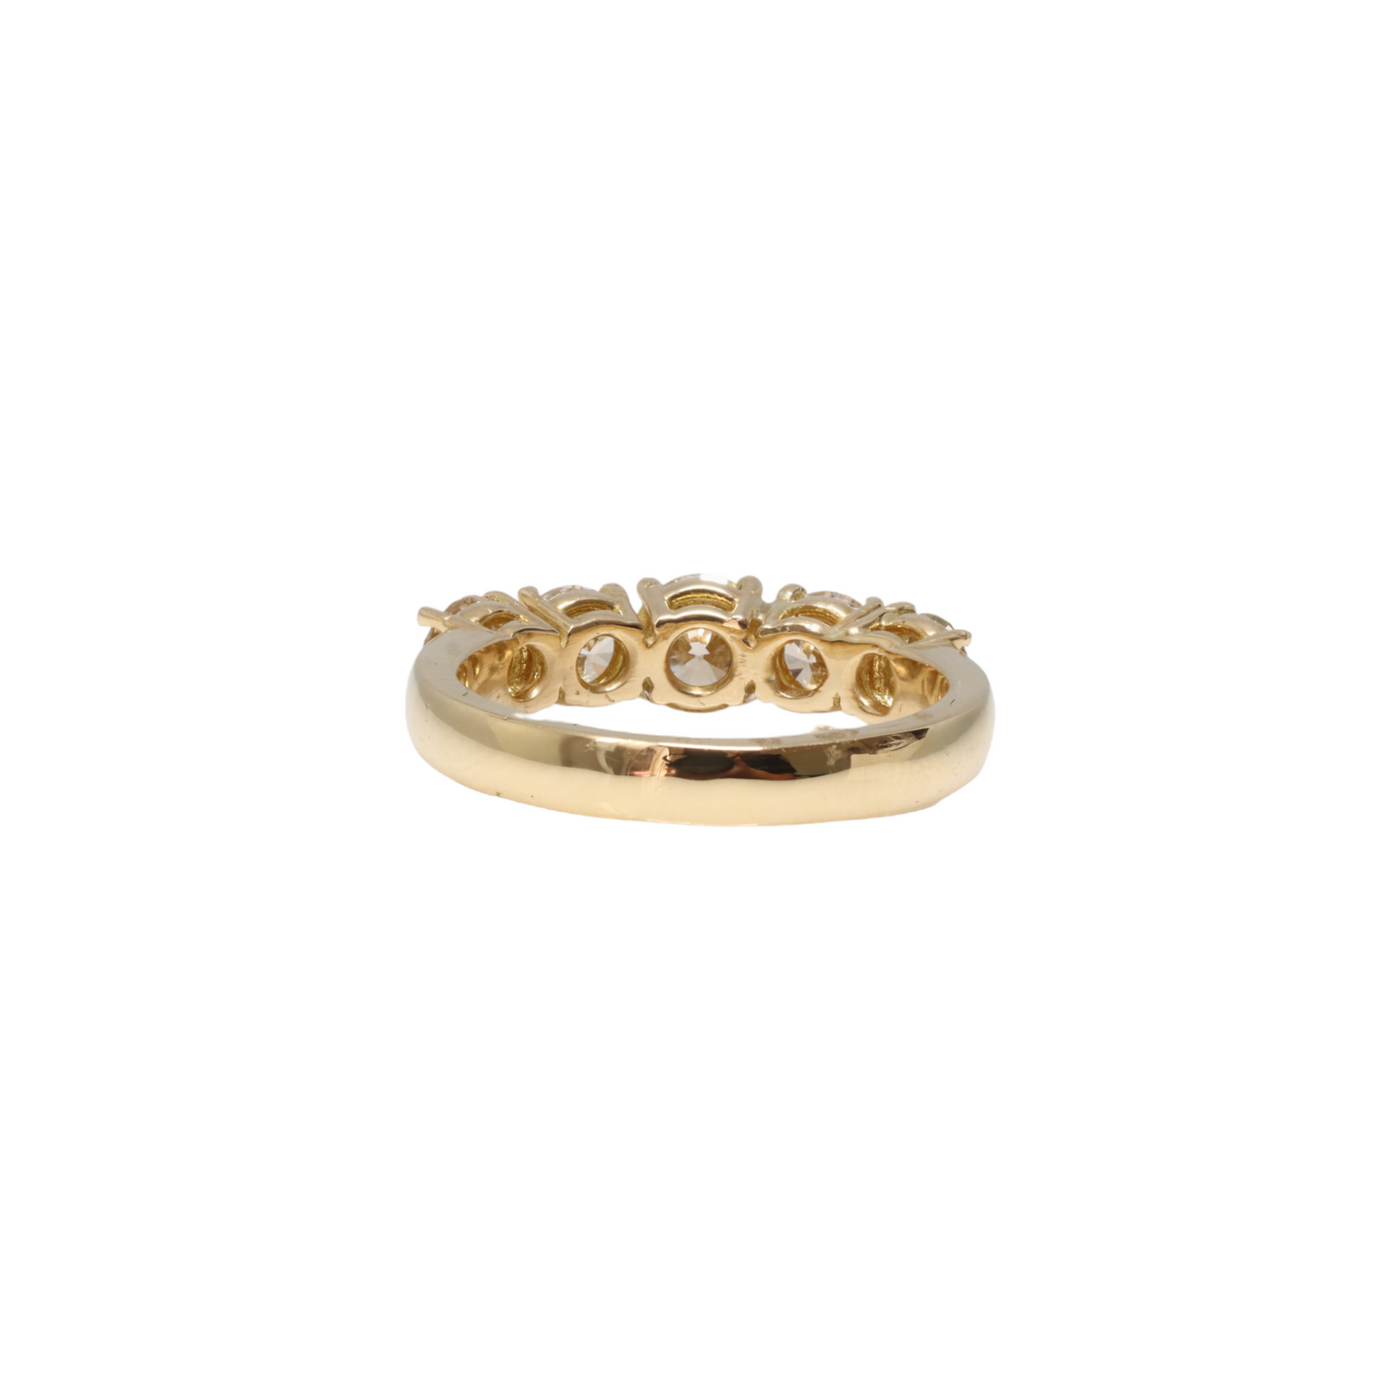 18ct yellow gold Diamond Dress ring